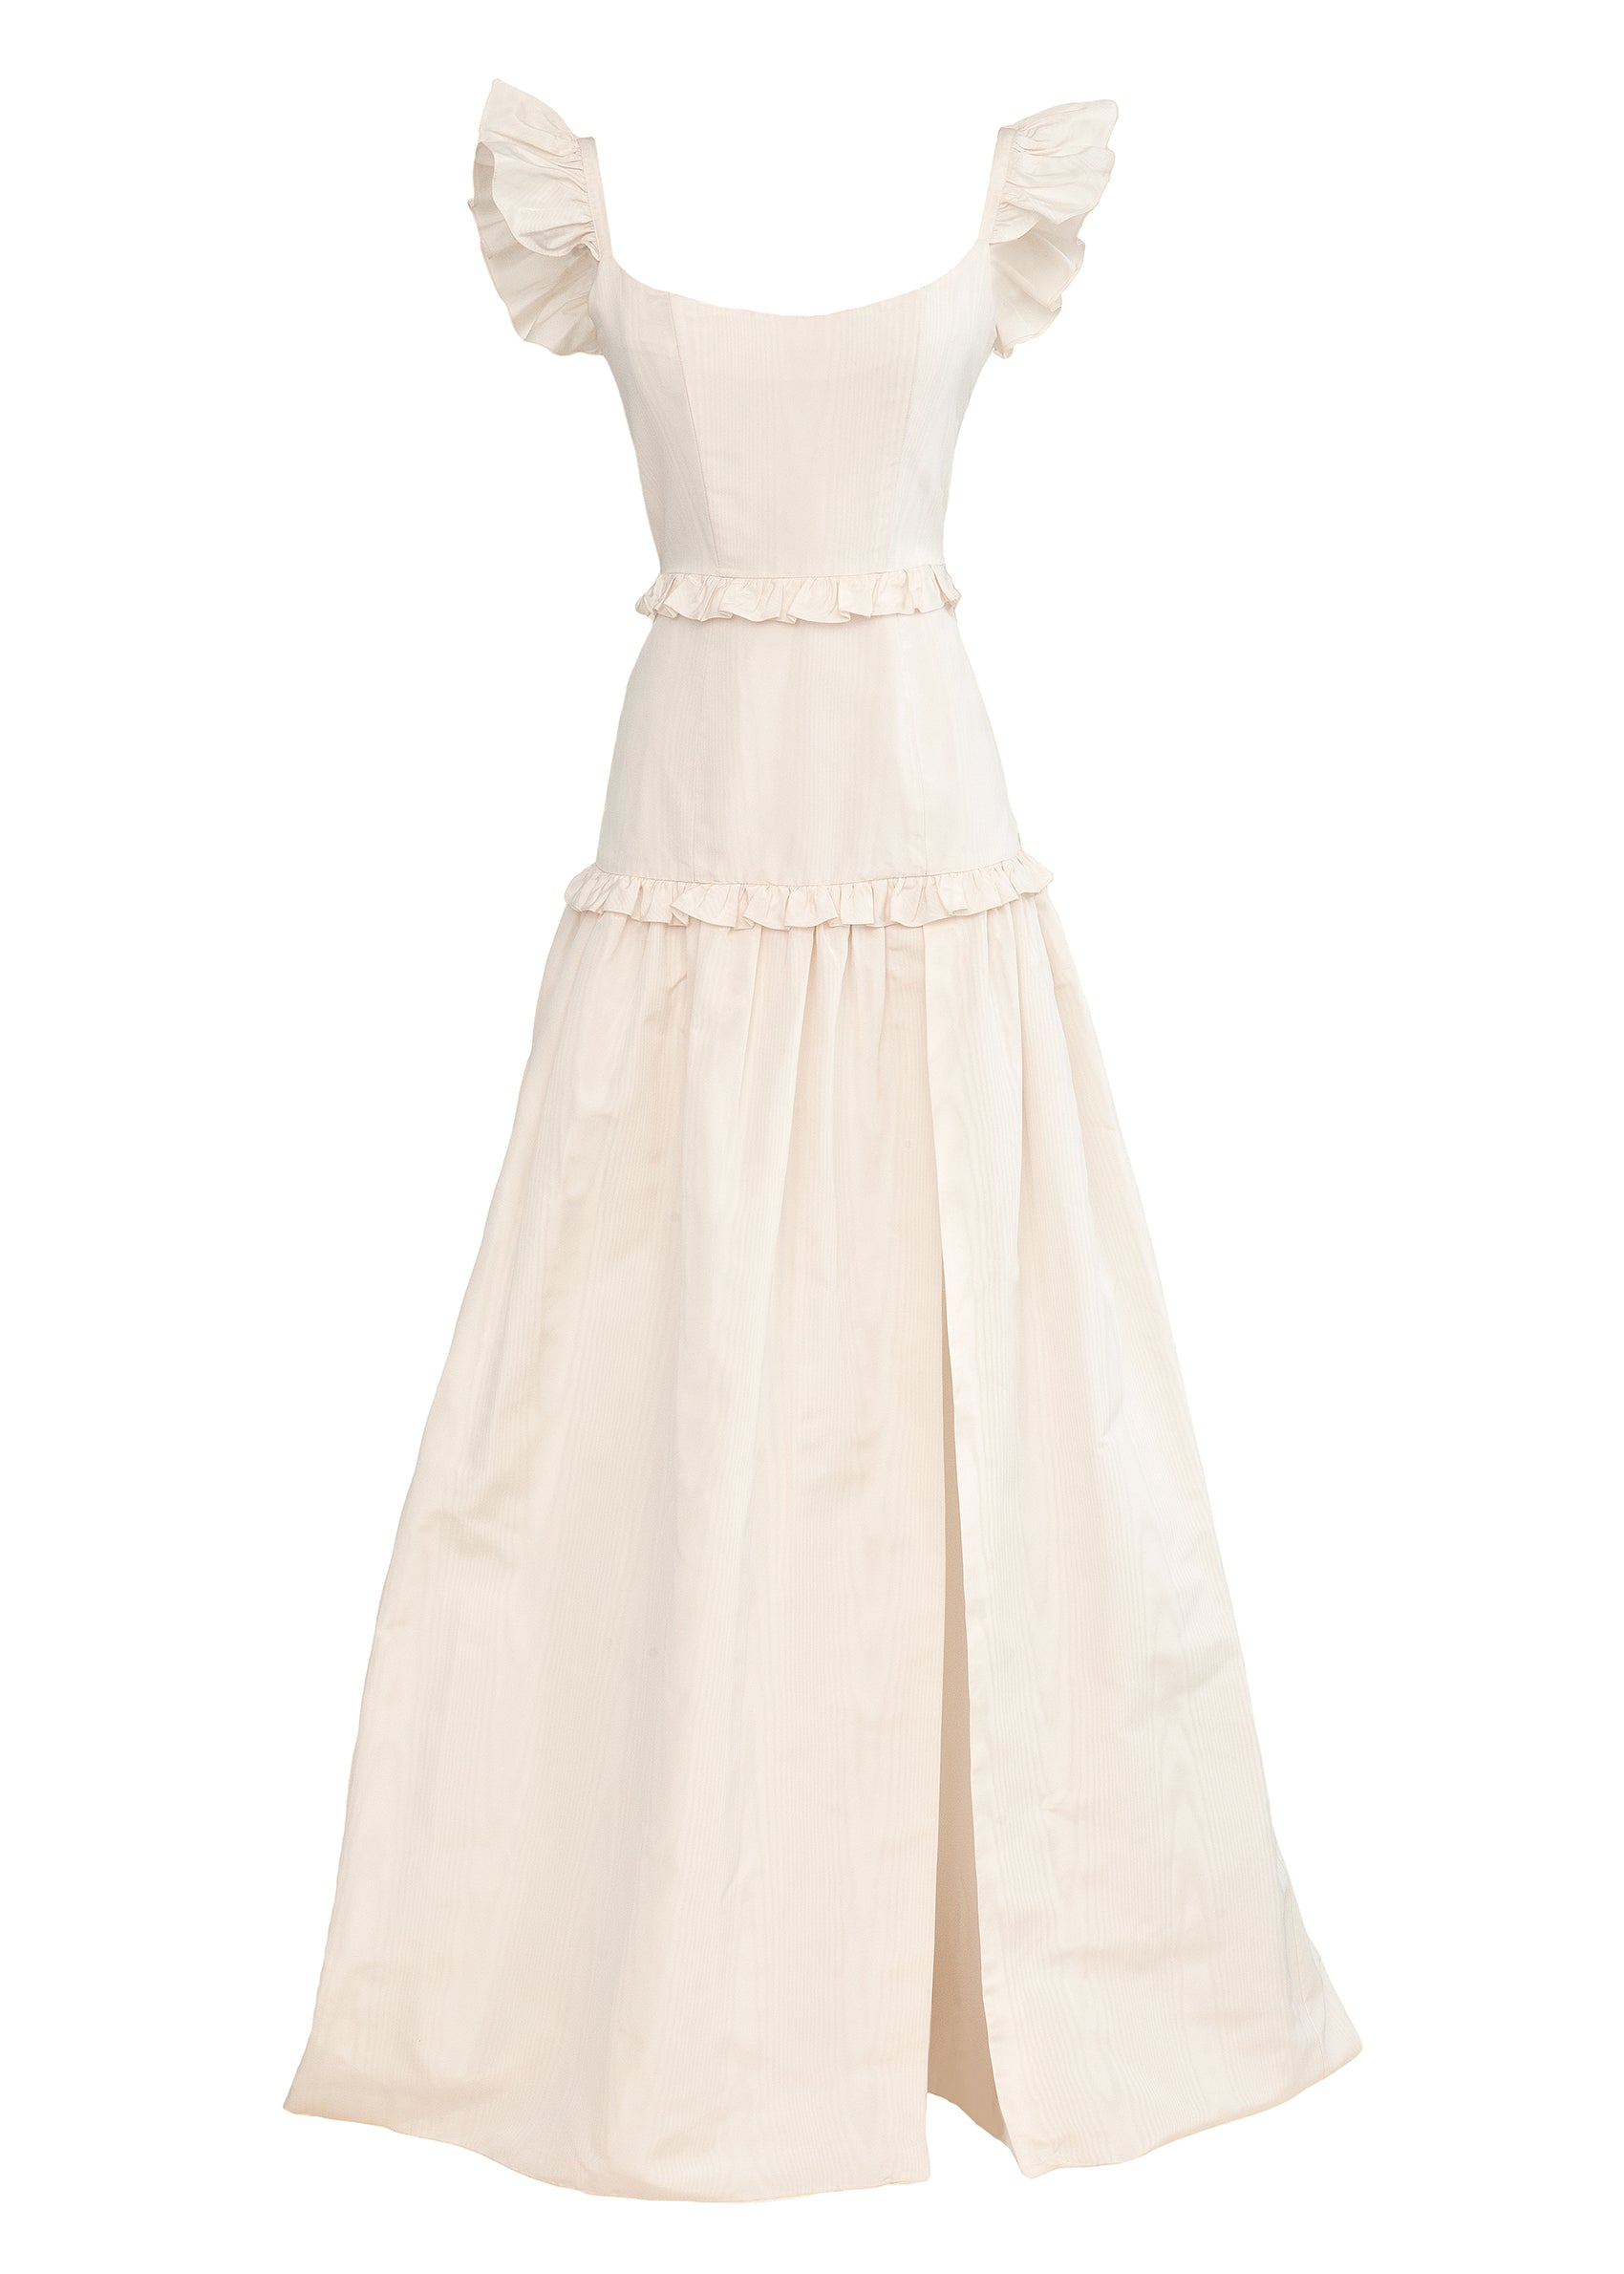 Arabella Maxi Dress - White